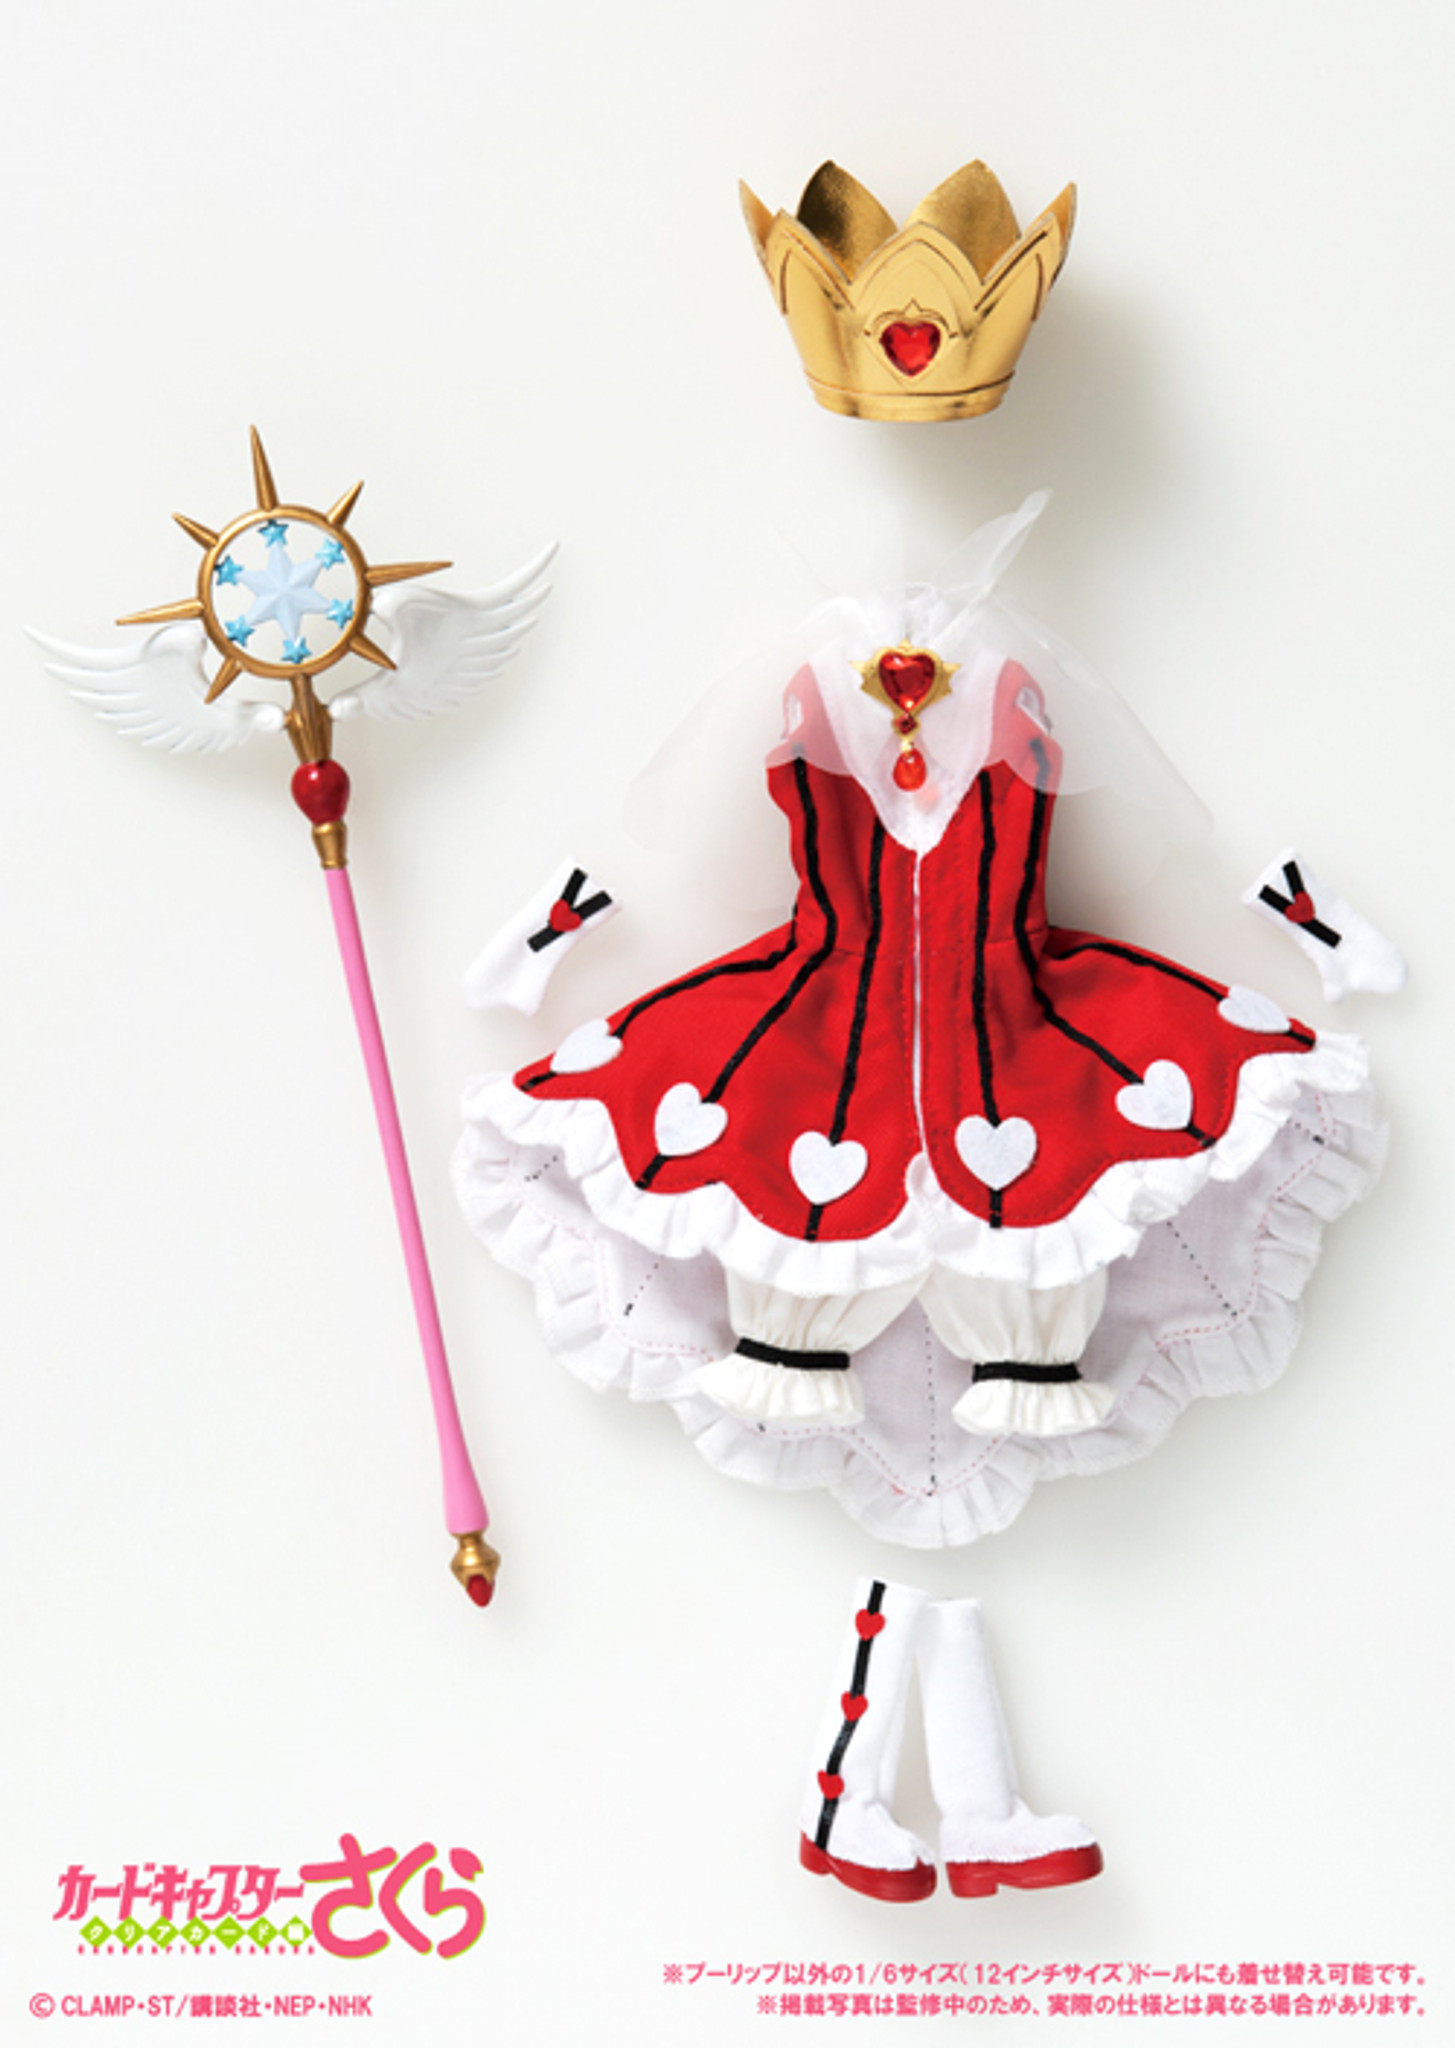 Cardcaptor Sakura “Cardcaptor Sakura -Clear Card-” Rocket Beat